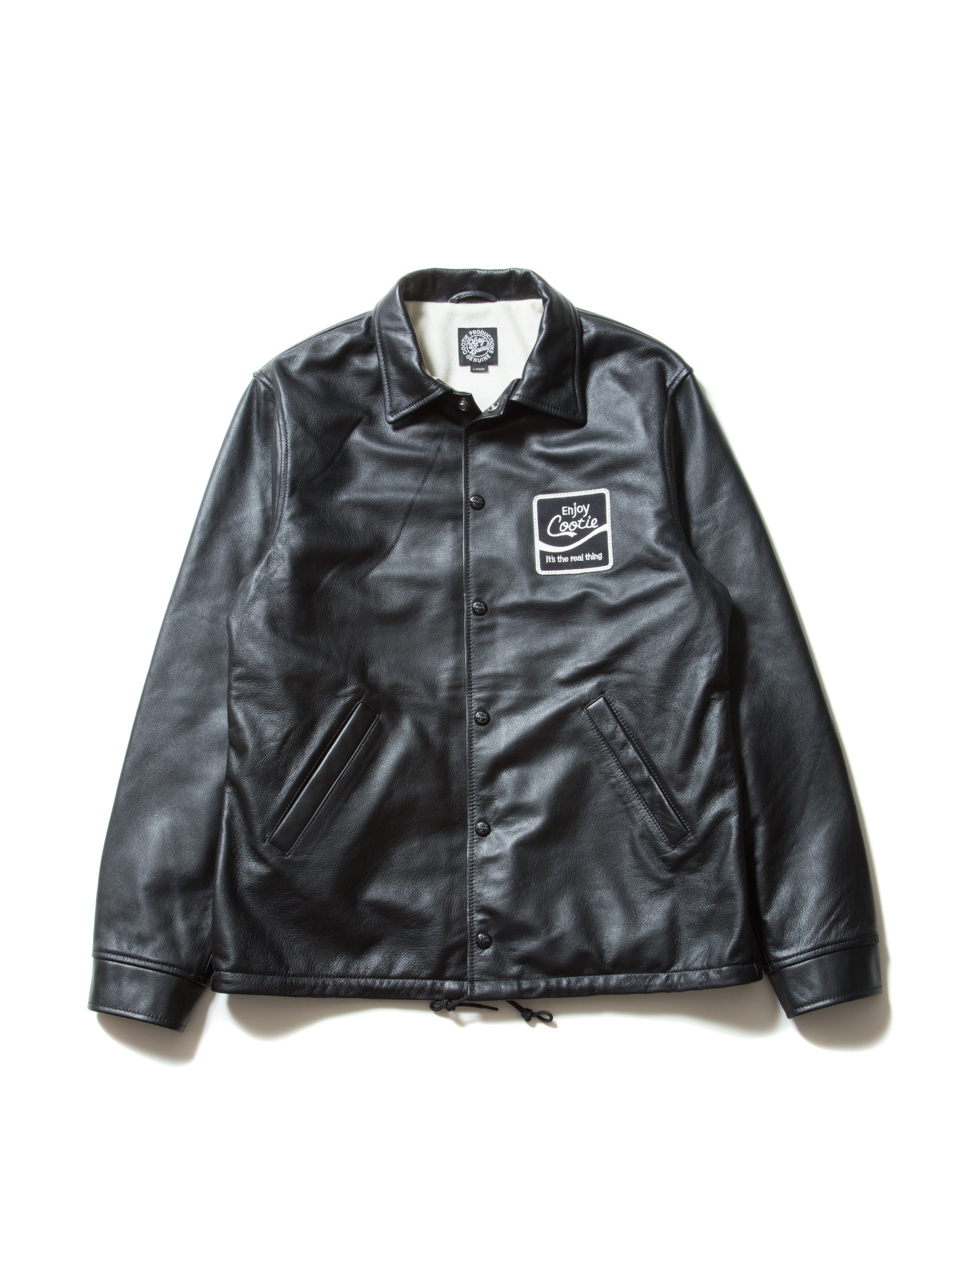 21aw COOTIE Leather Coach Jacket - ステンカラーコート